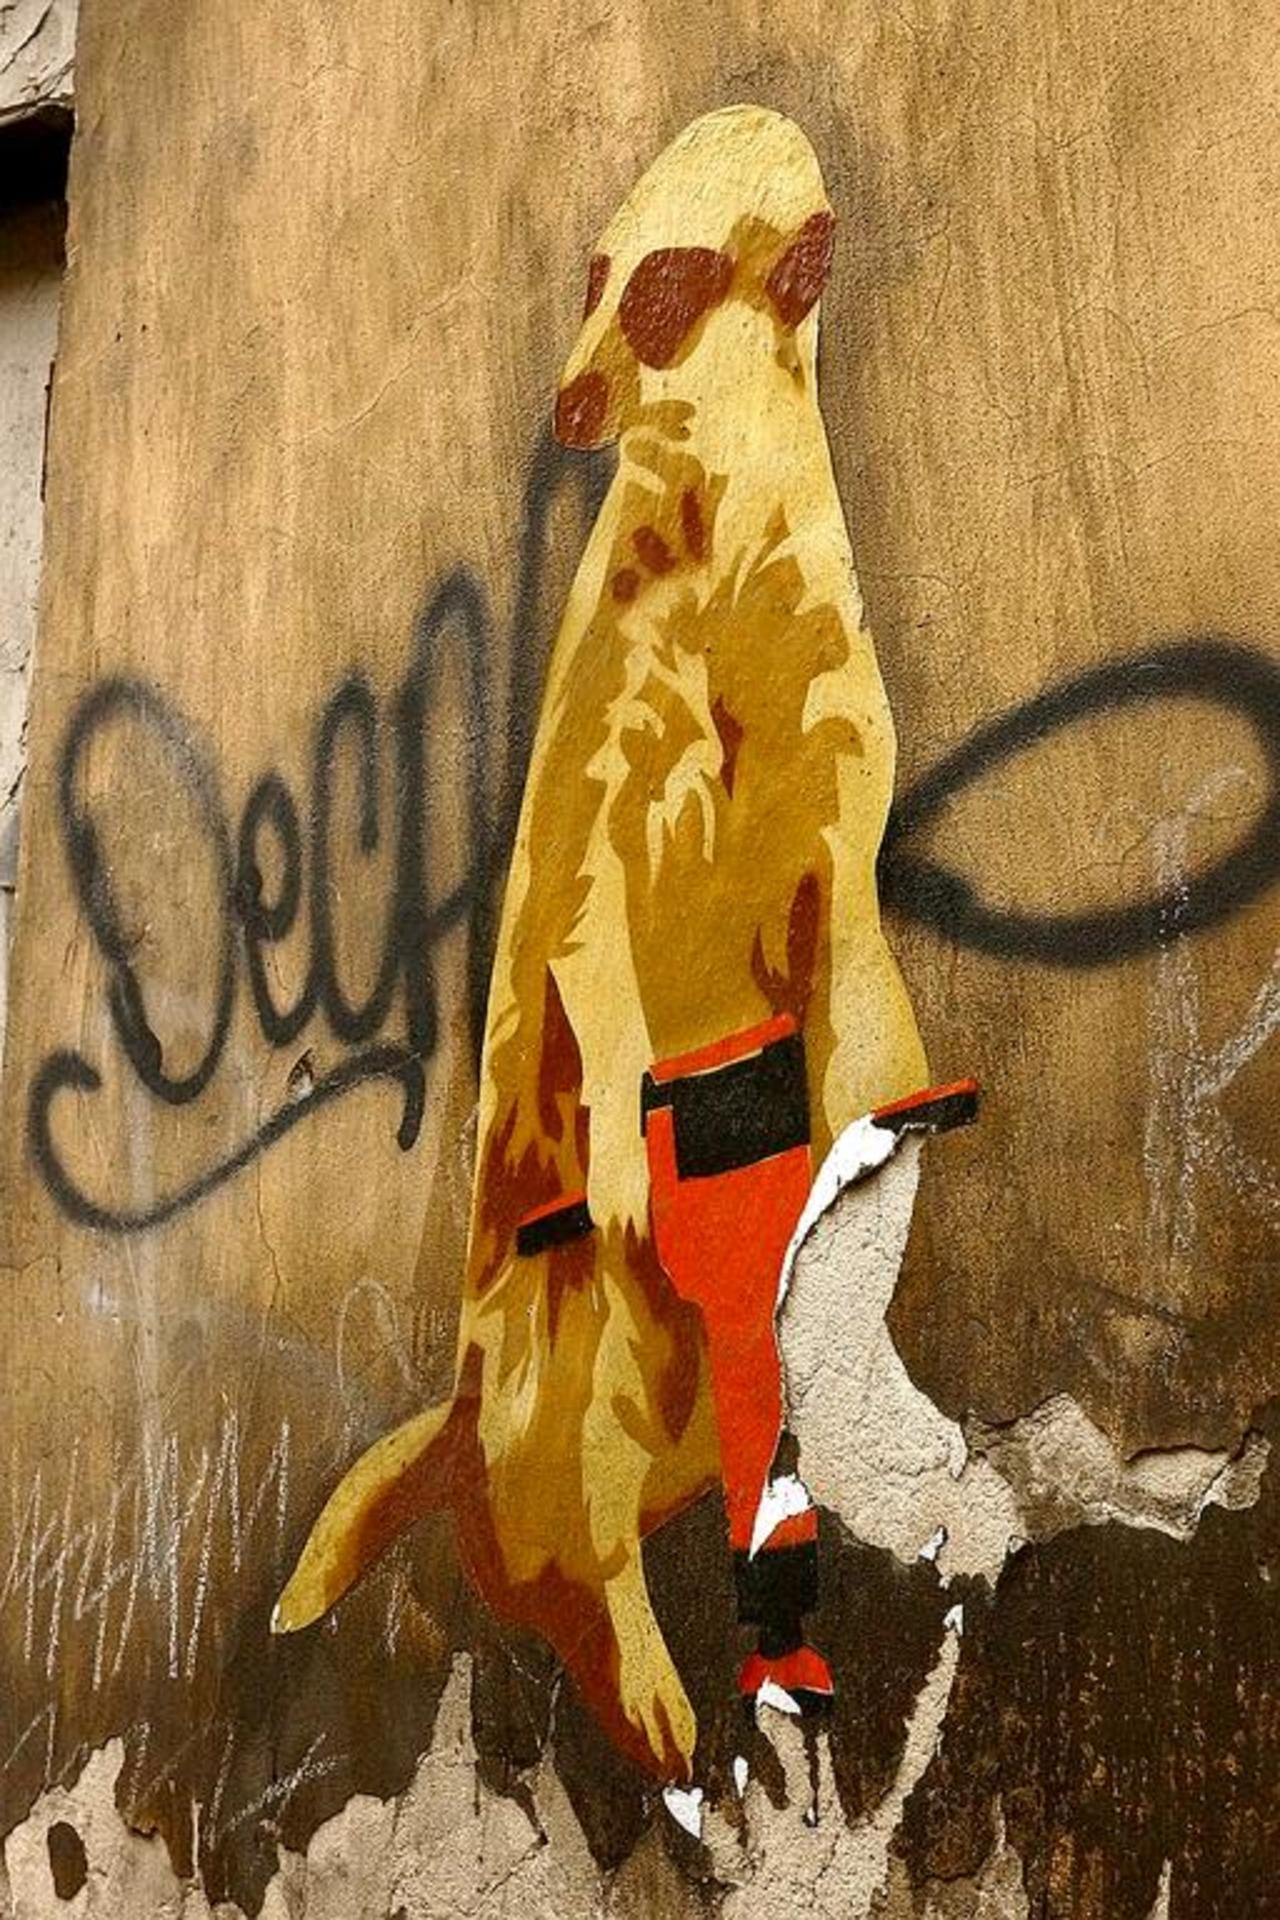 Street Art by anonymous in #Budapest http://www.urbacolors.com #art #mural #graffiti #streetart http://t.co/C5tQ8VbKz5